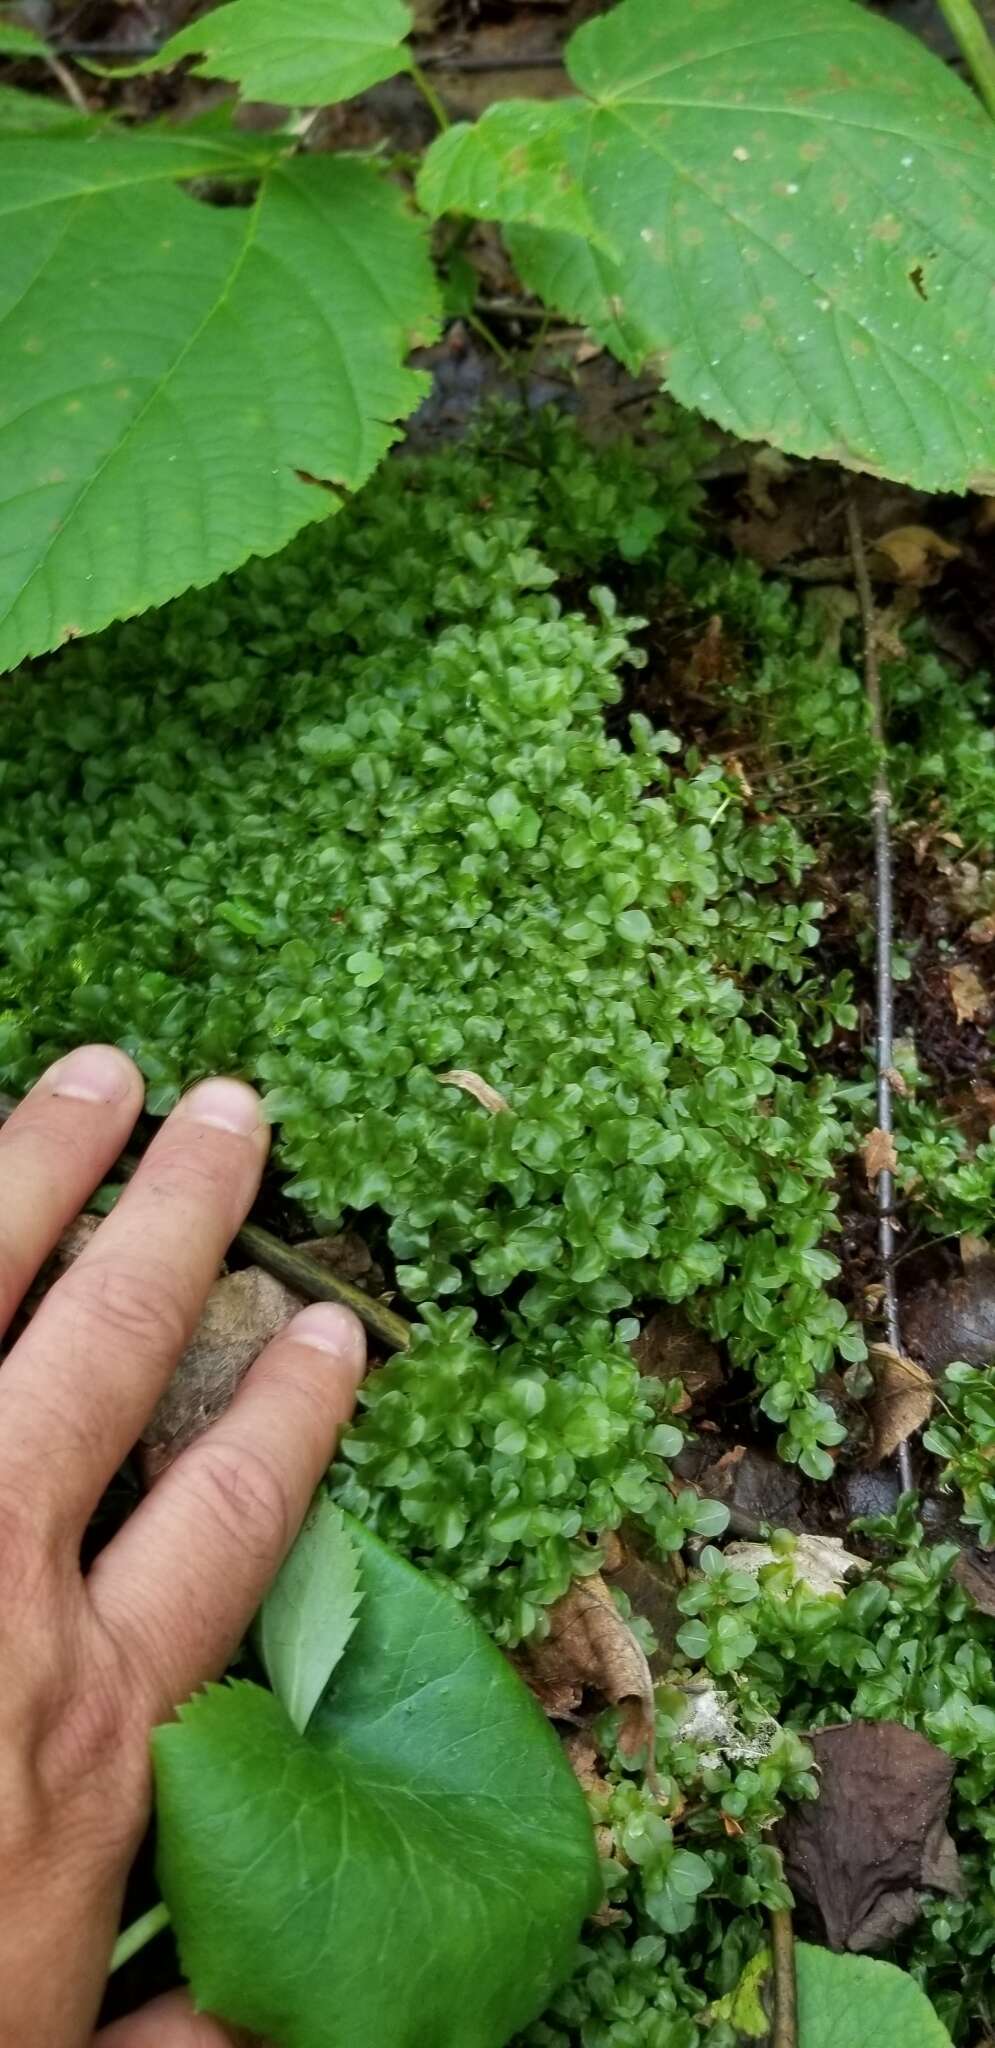 Image of Appalachian rhizomnium moss